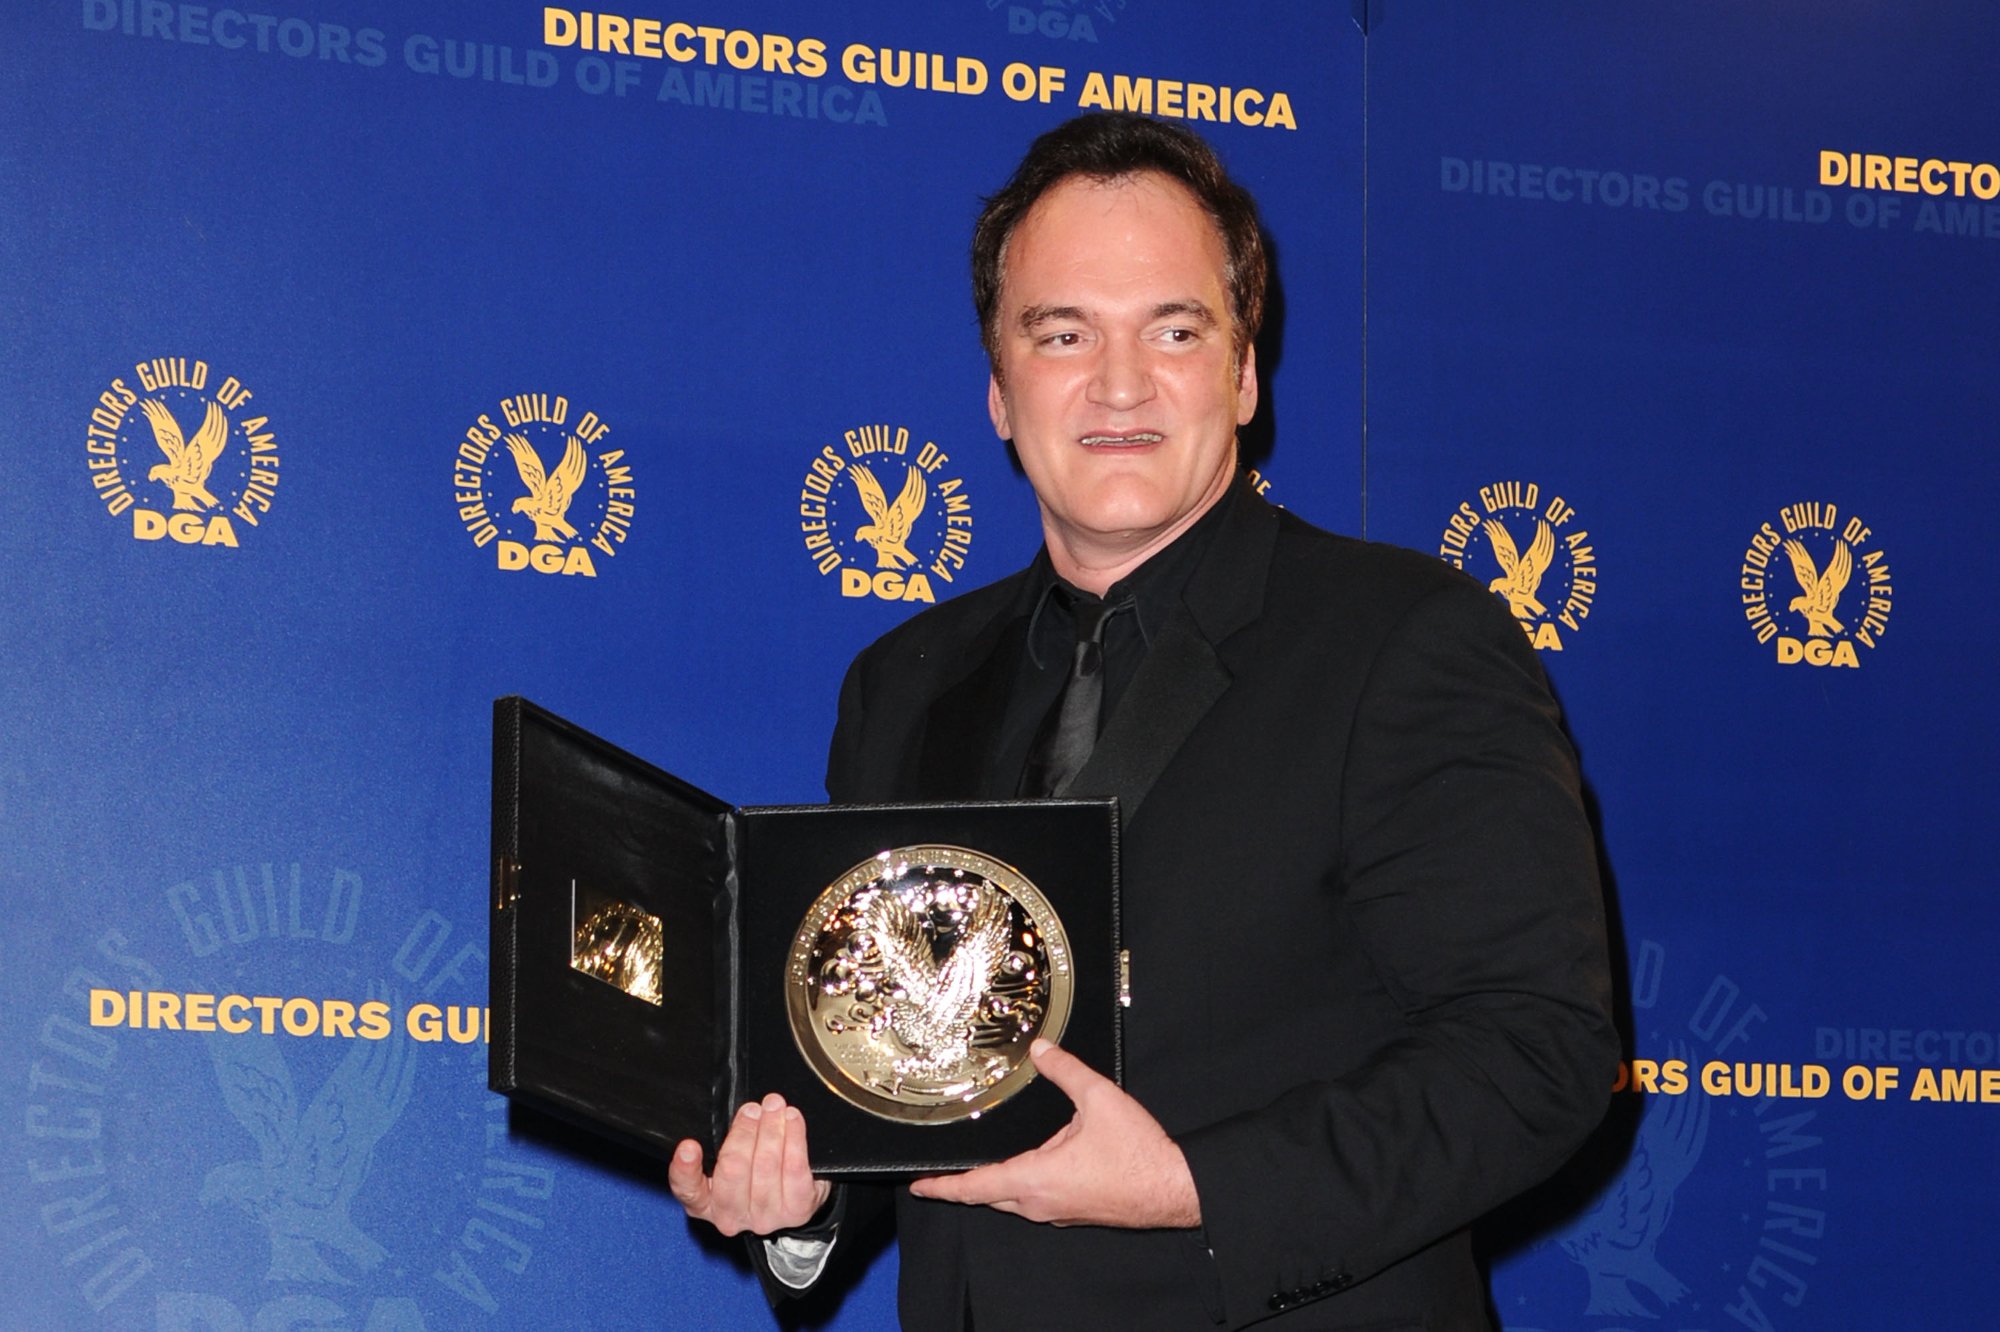 'Inglourious Basterds' filmmaker Quentin Tarantino holding a plaque wearing a black suit